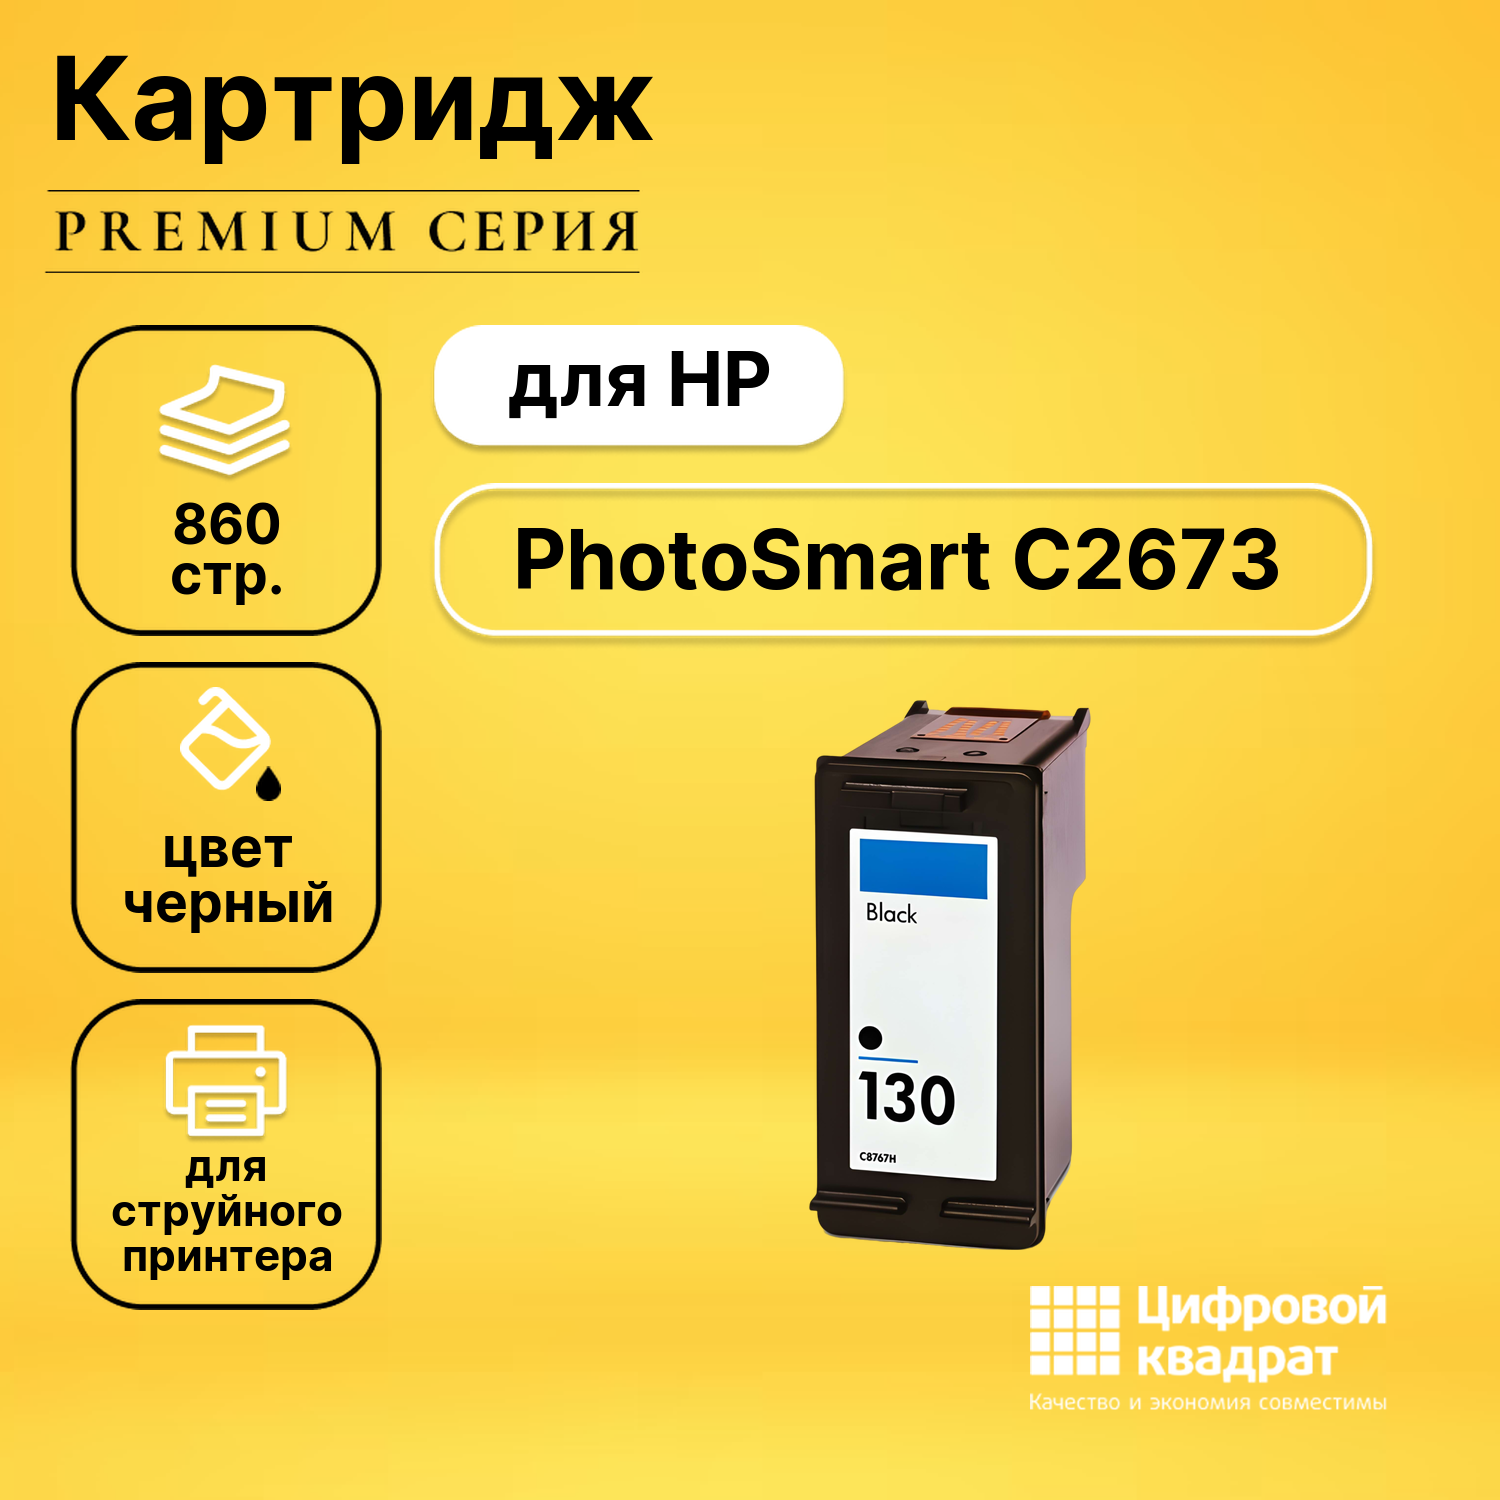 Картридж DS для HP PhotoSmart C2673 совместимый